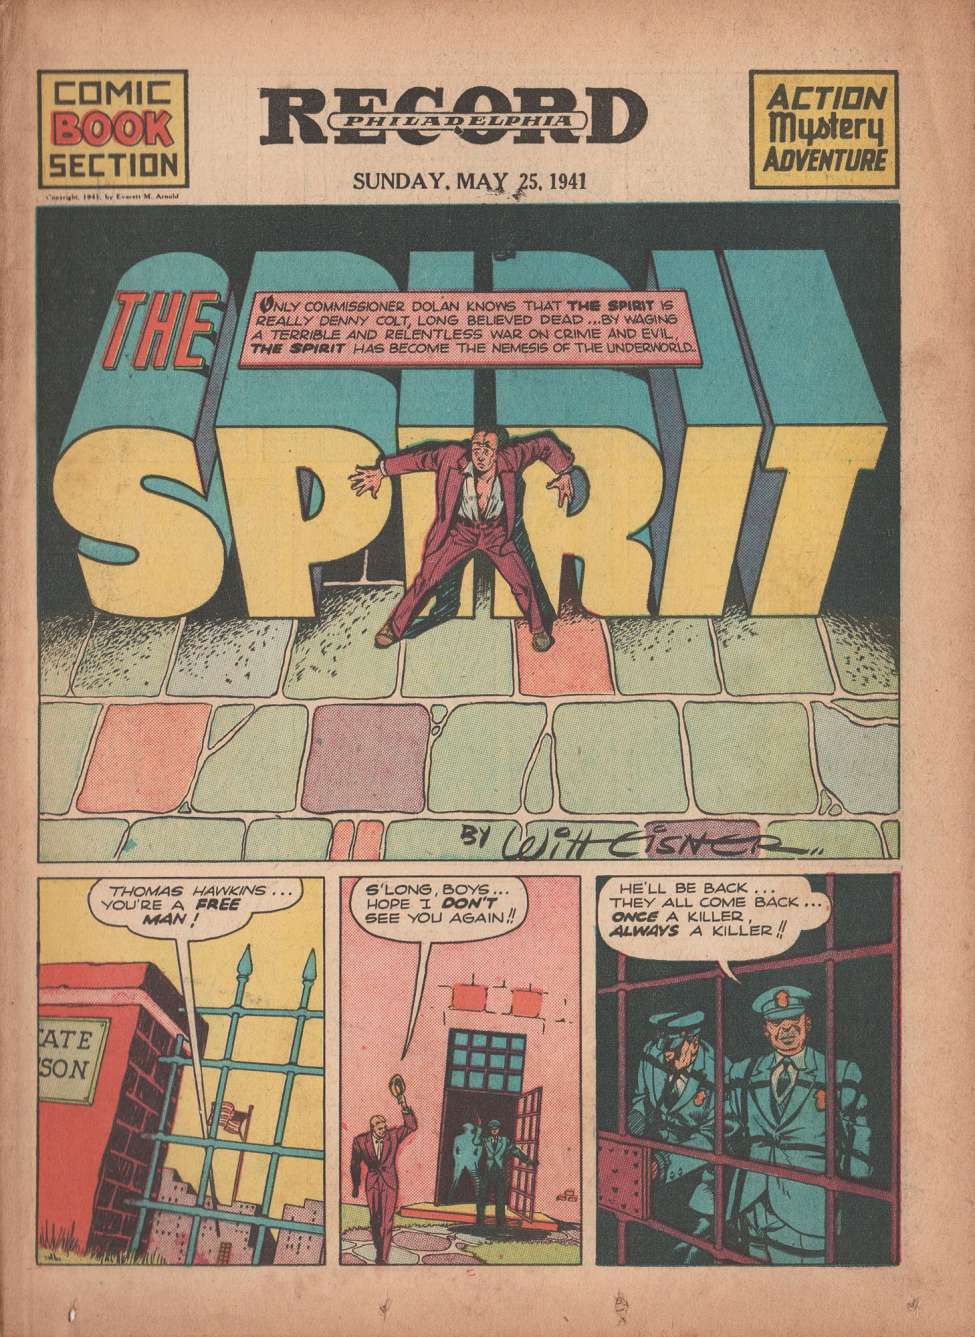 Comic Book Cover For The Spirit (1941-05-25) - Philadelphia Record